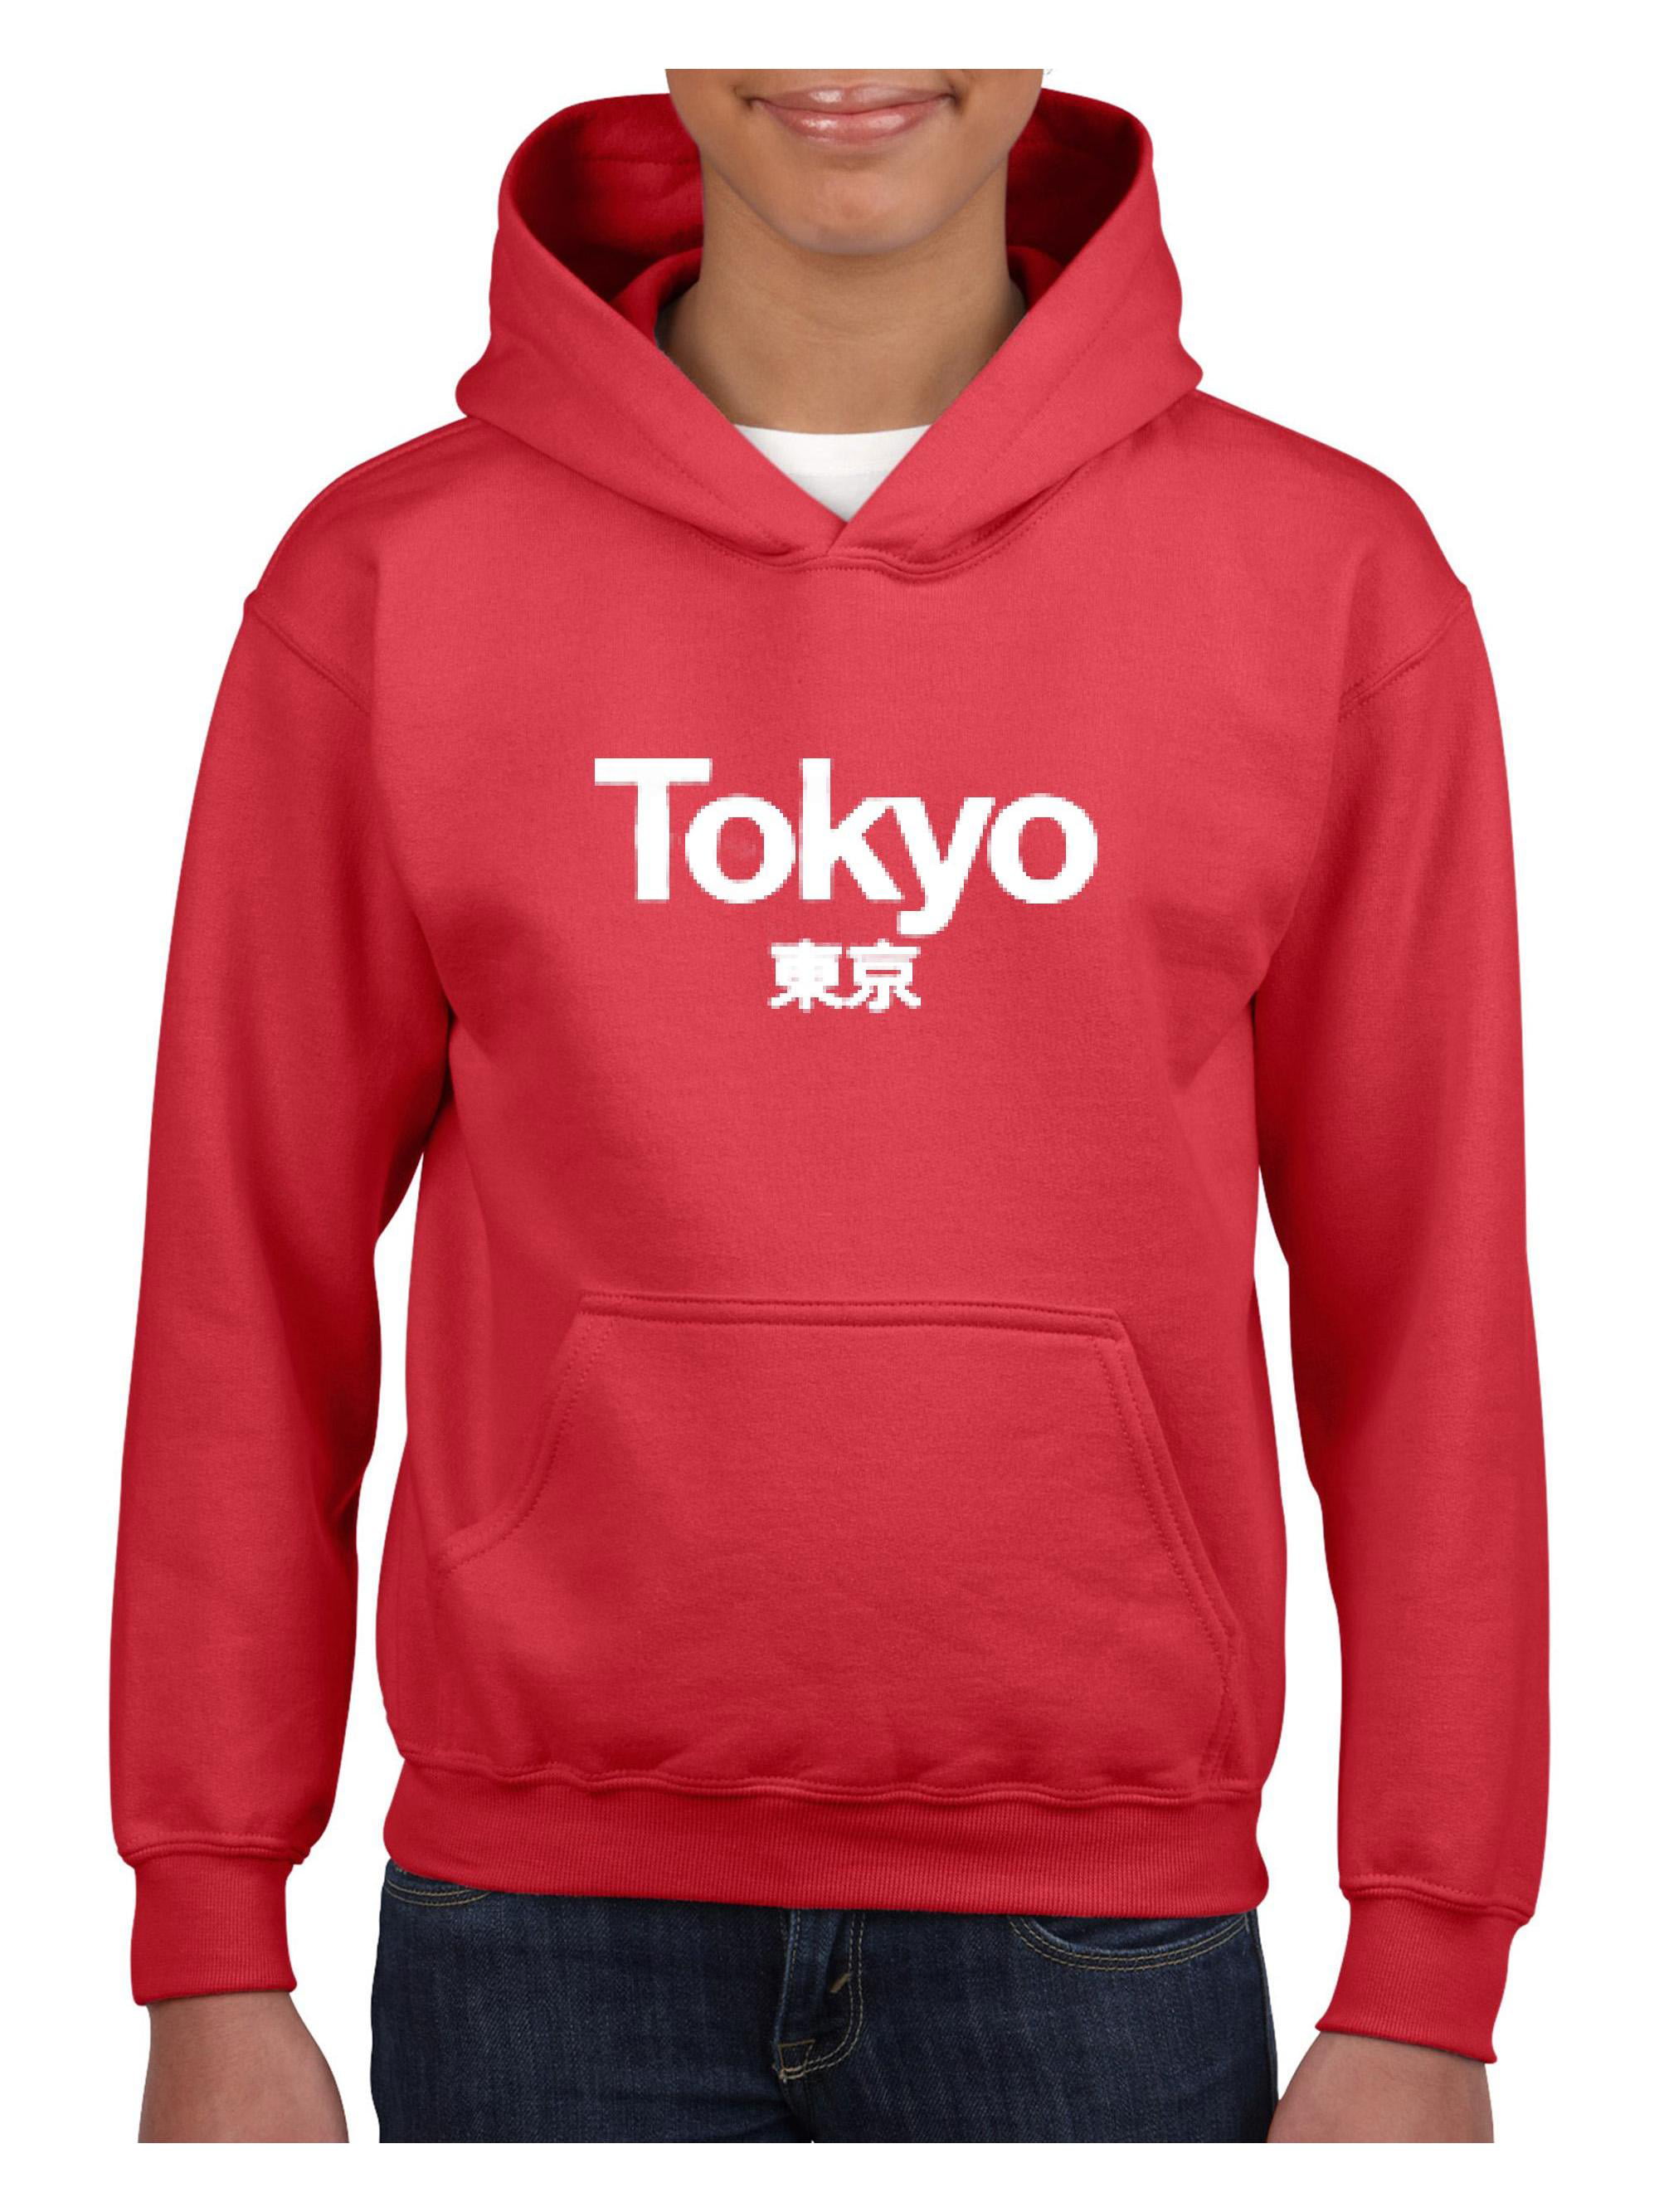 Mom's Favorite - Youth Tokyo Japan Hoodie For Girls and Boys Sweatshirt ...